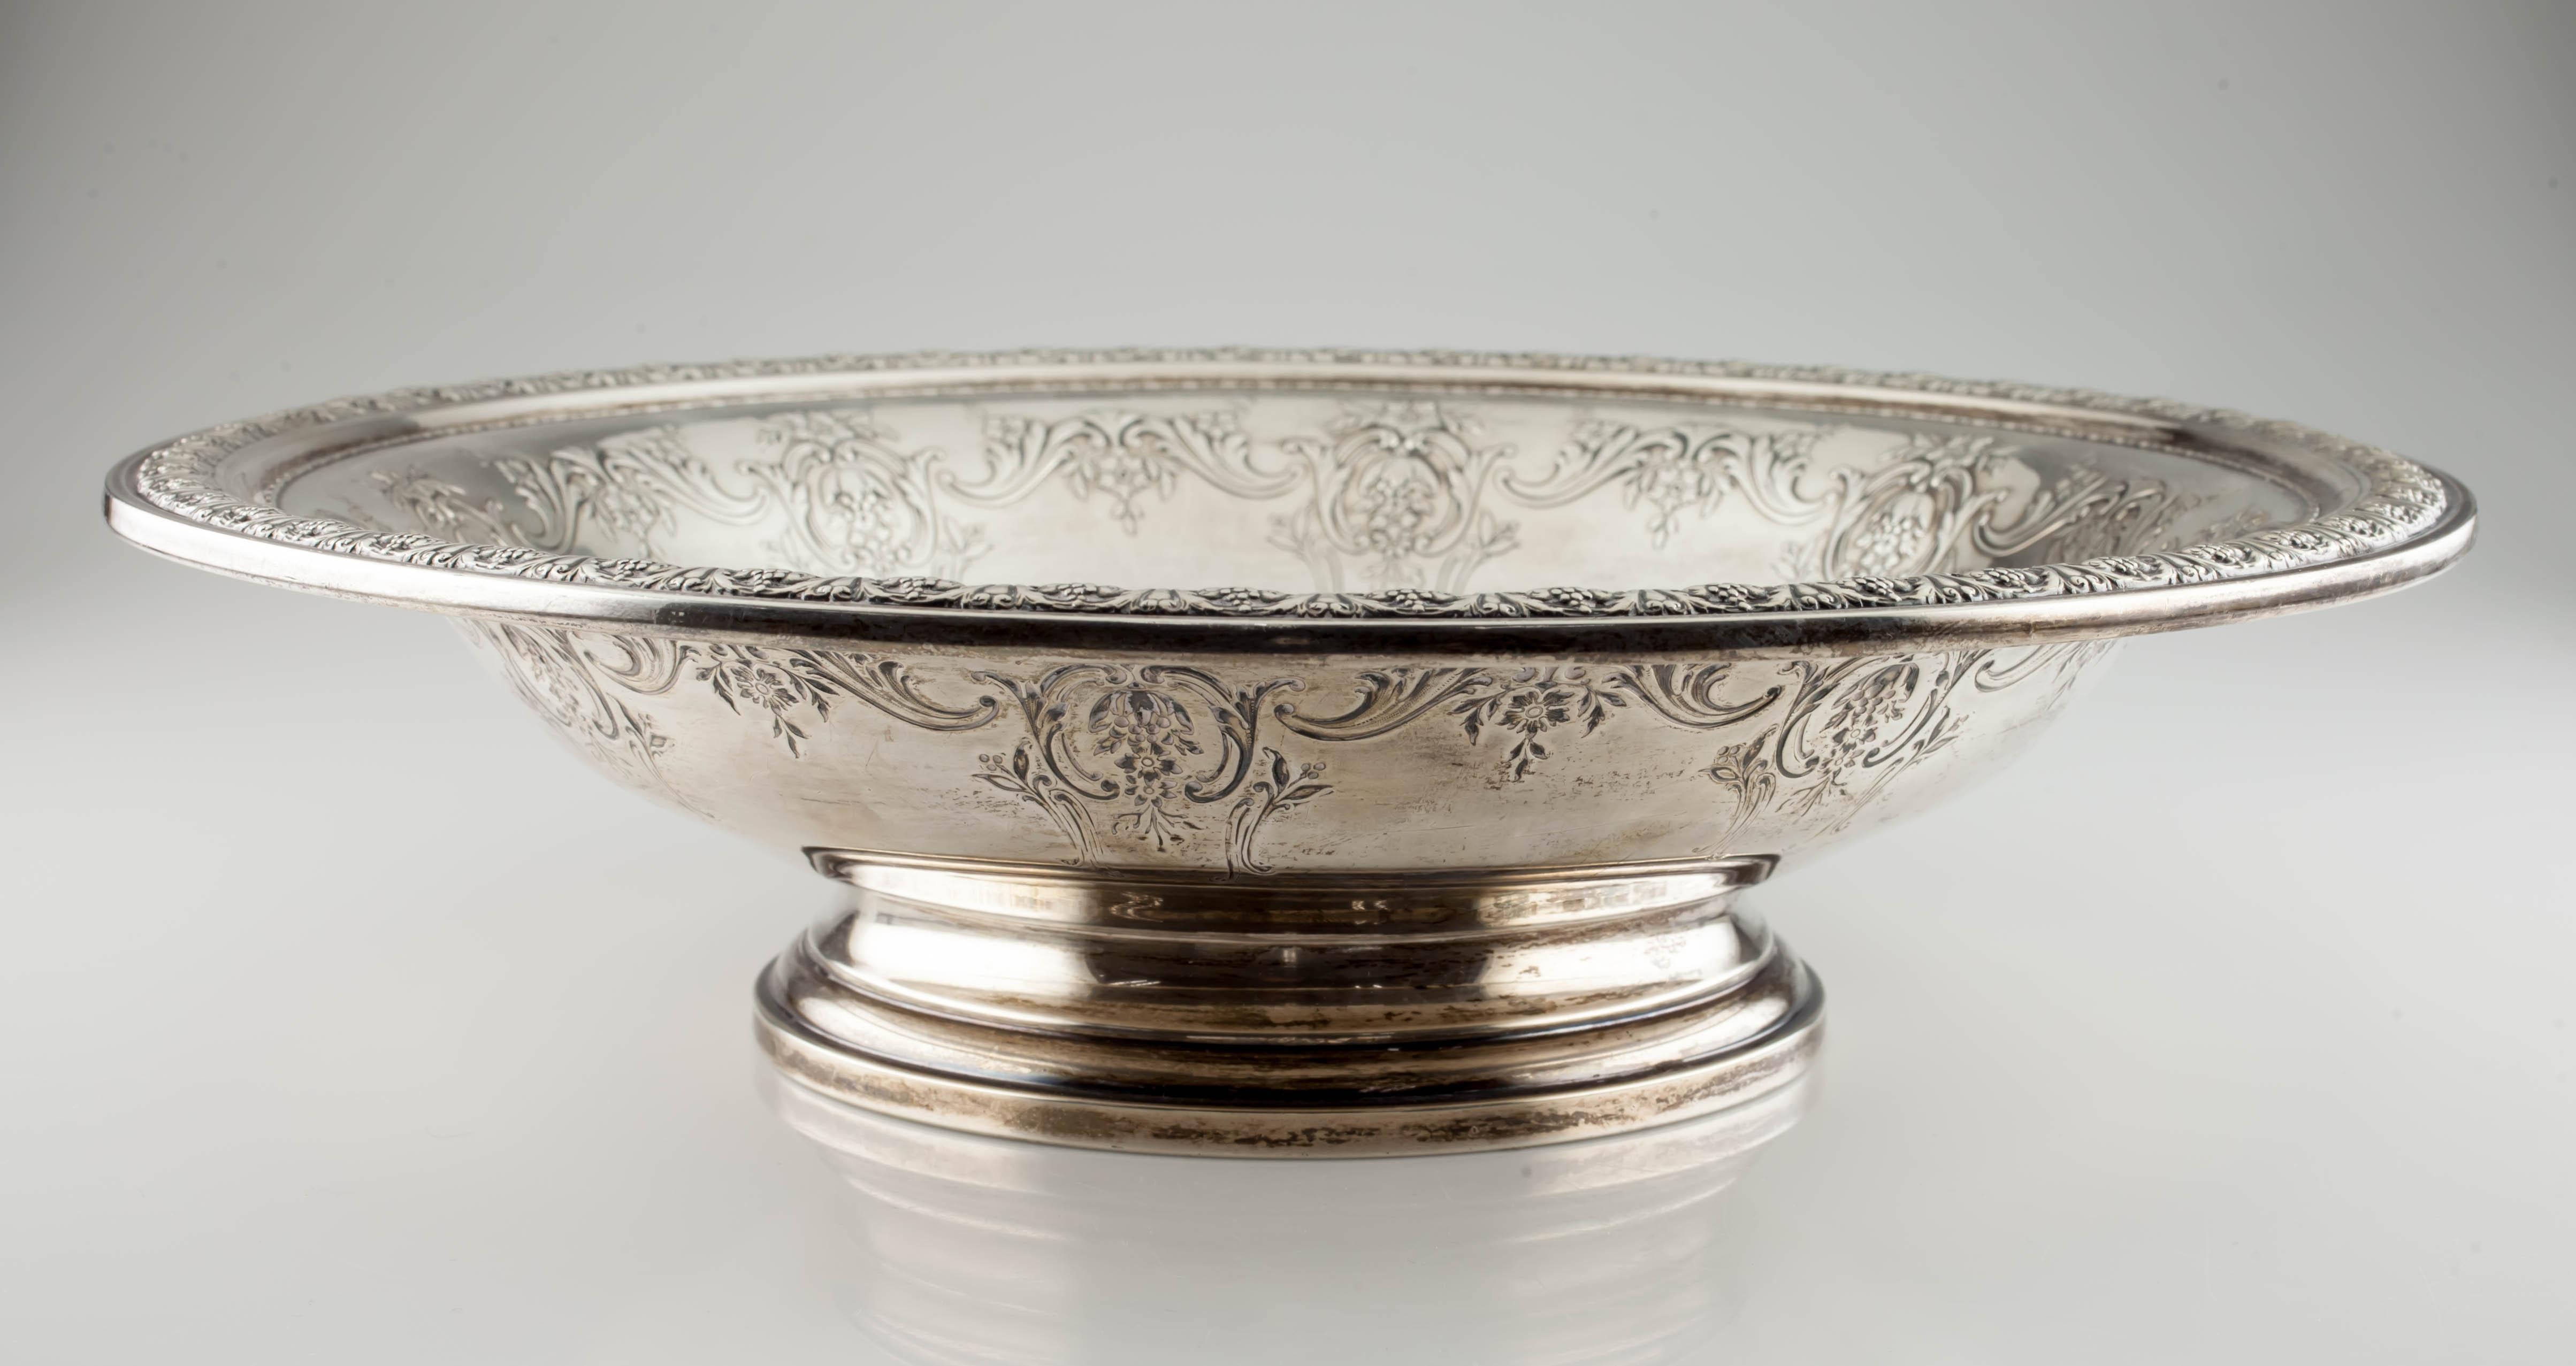 Gorham Sterling Silver King Edward Large Footed Bowl #378 Gorgeous Centerpiece!

Gorgeous King Edward Large Footed Bowl
Solid Sterling Silver
#378
12